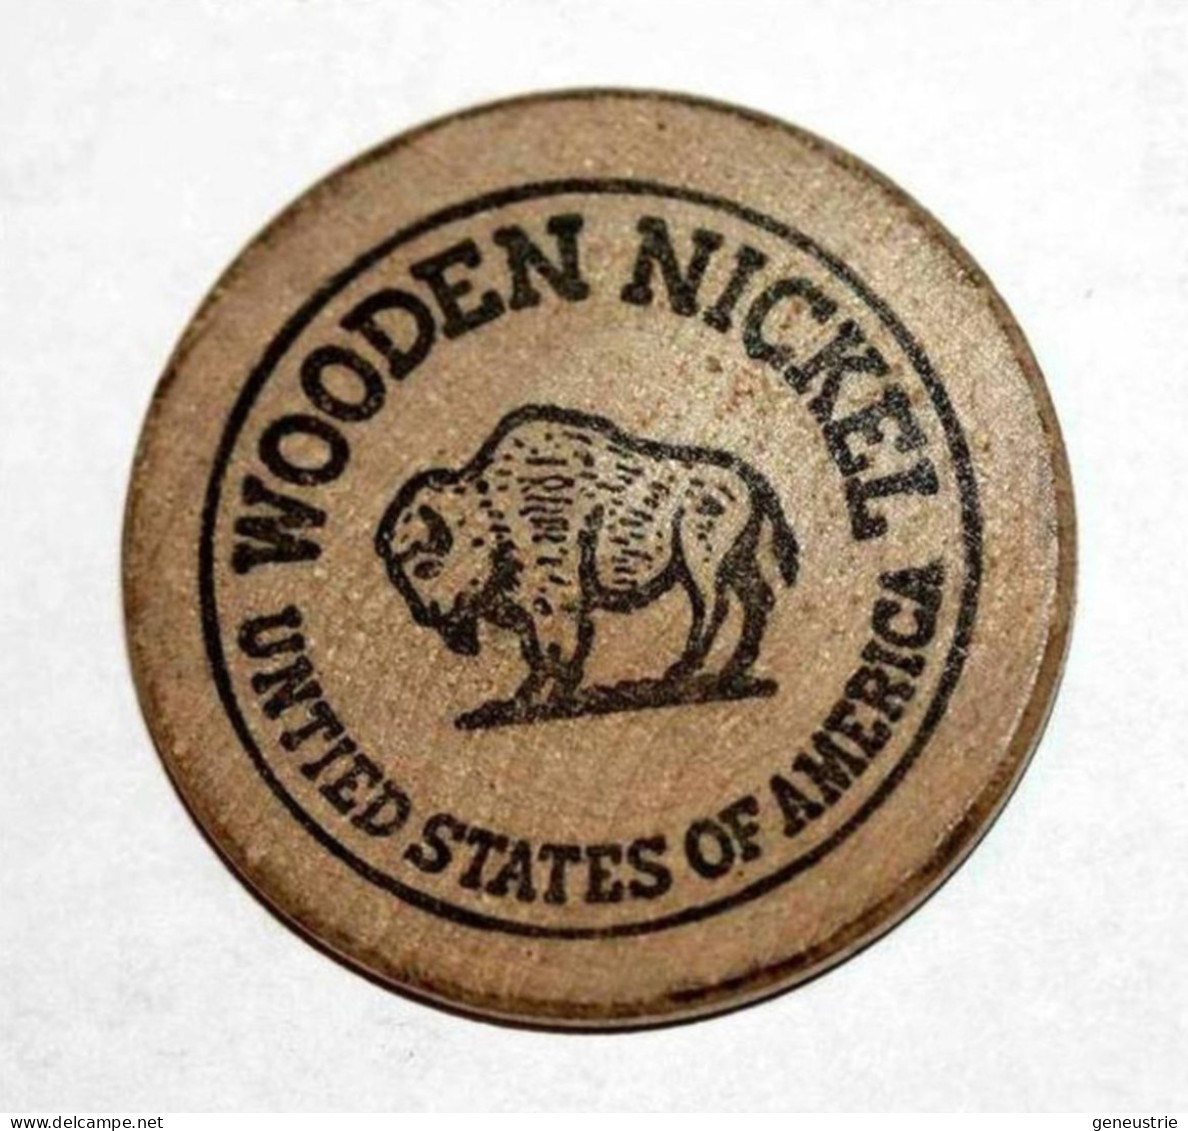 Wooden Token - Wooden Nickel - Jeton Bois Bison Monnaie Nécessité - Appreciation Dinner 1969 - Etats-Unis - Monedas/ De Necesidad